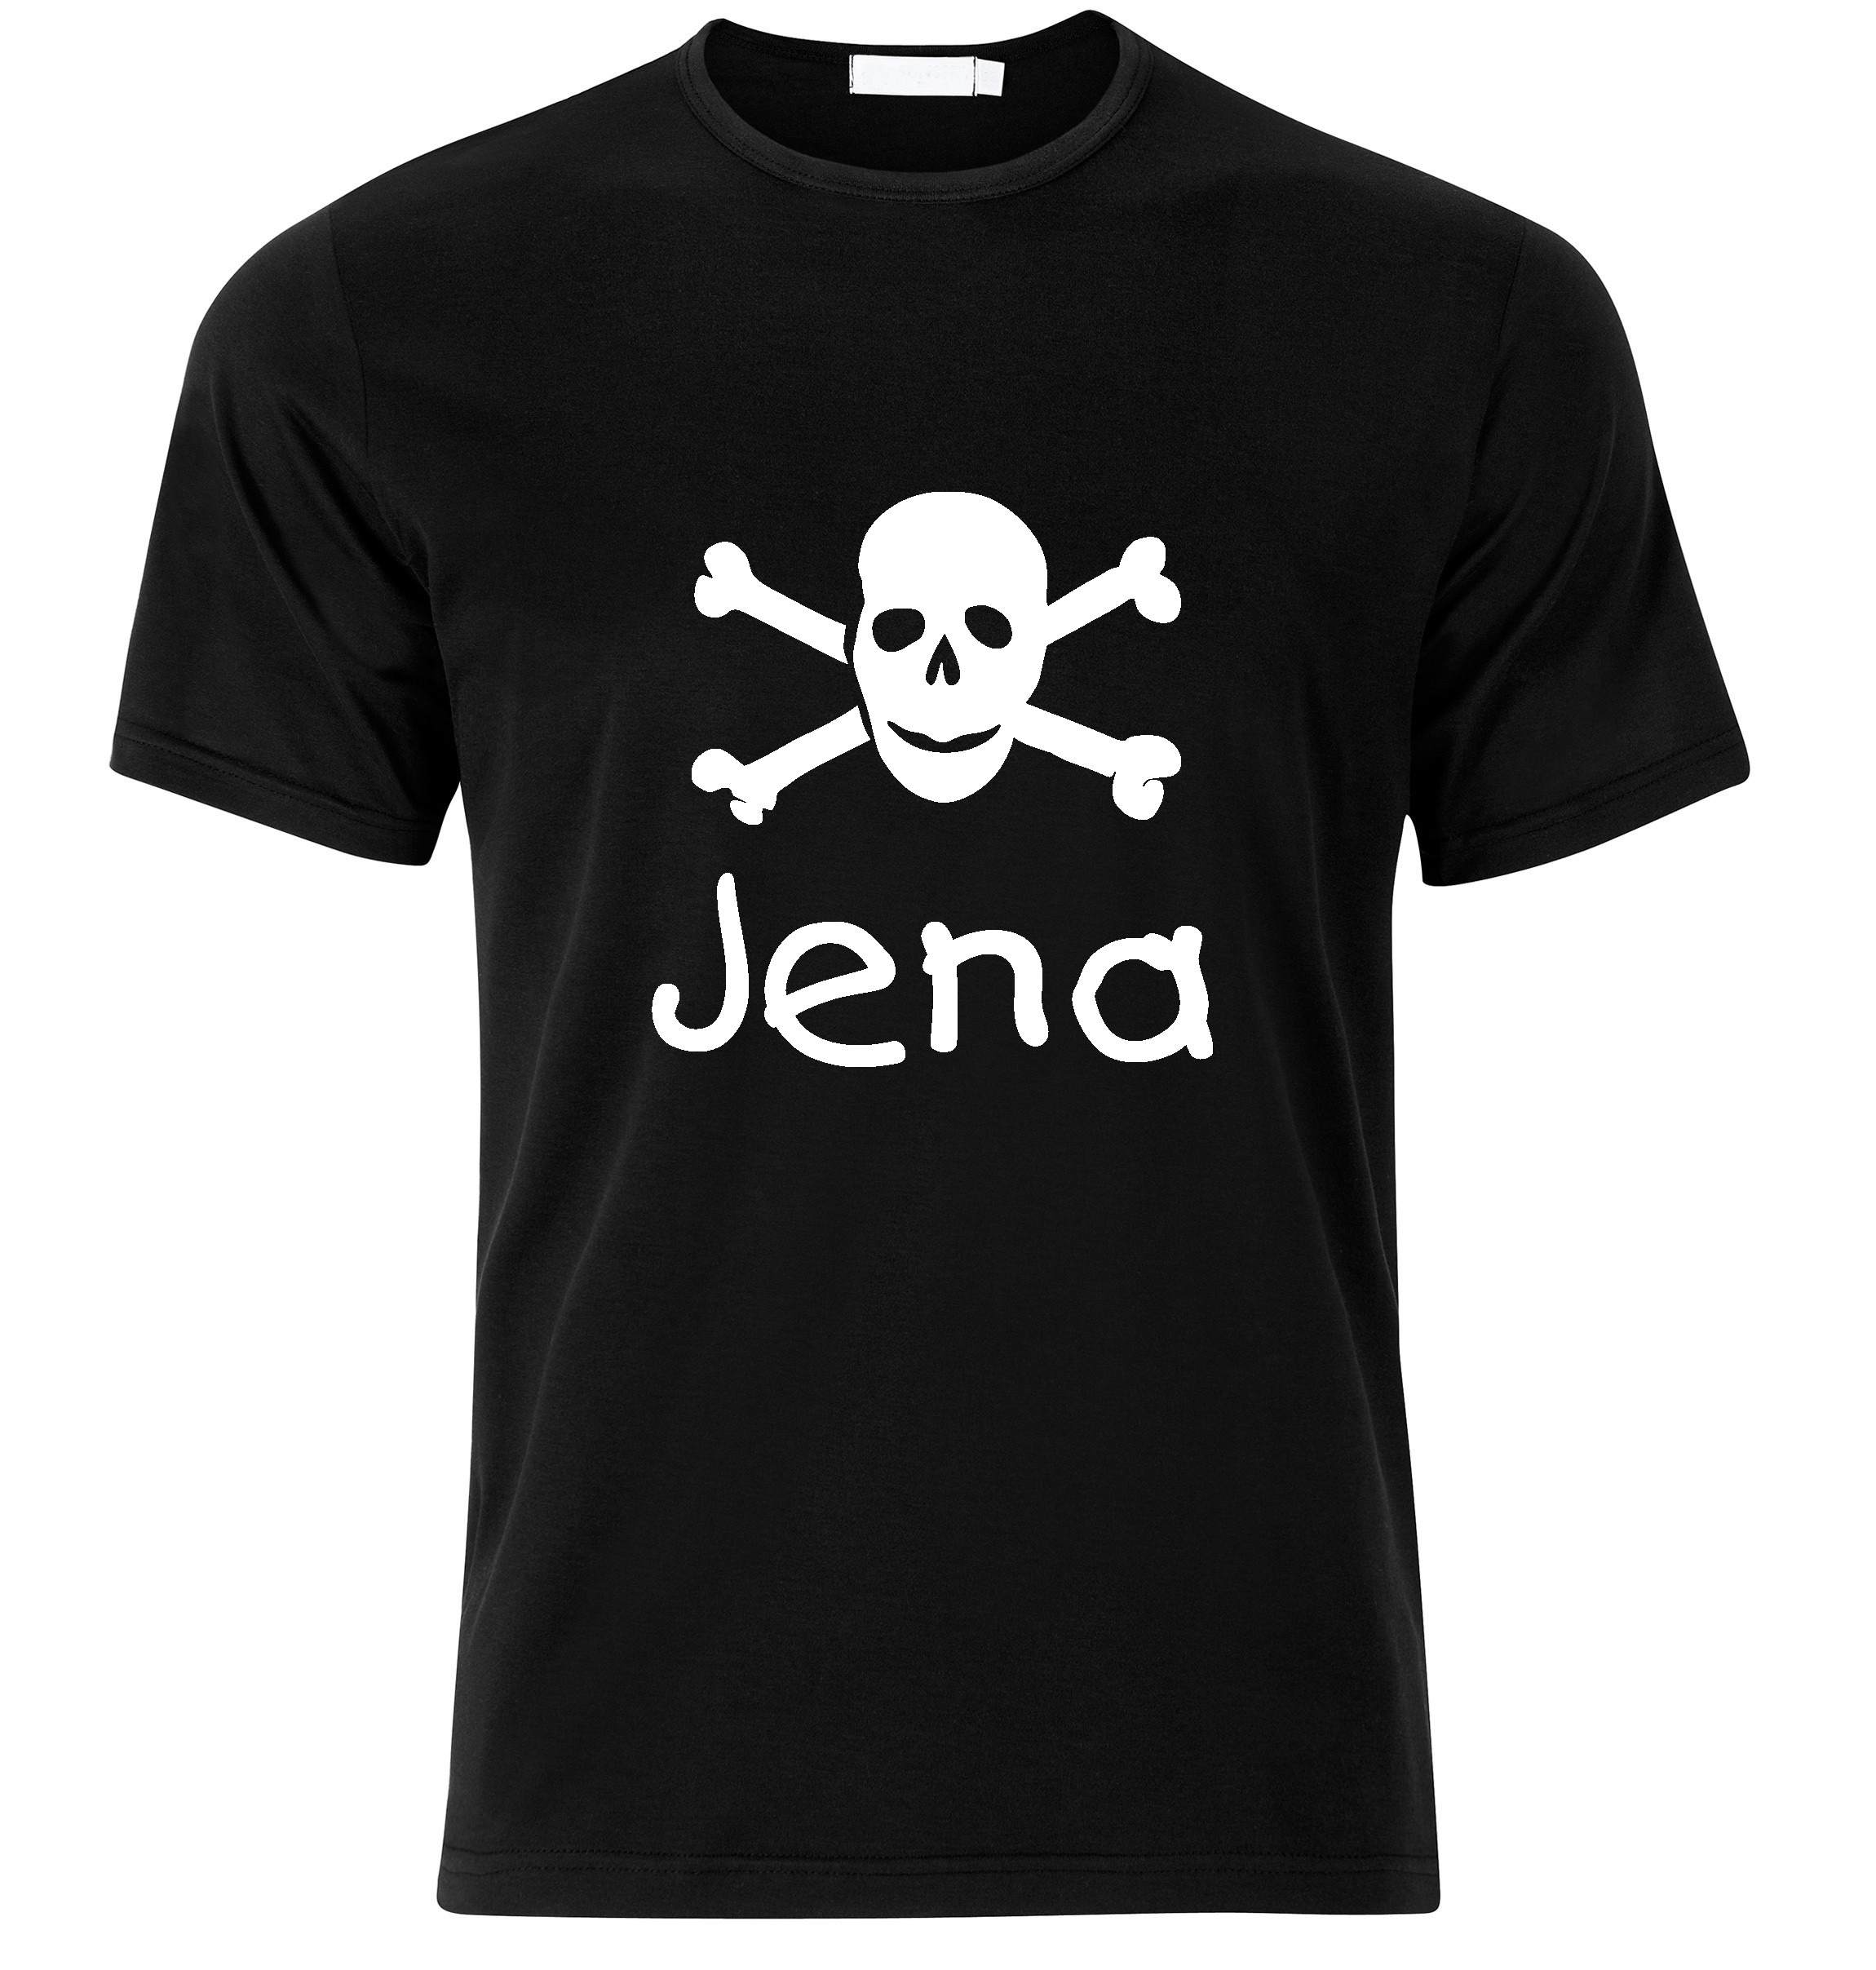 T-Shirt Jena Jolly Roger, Totenkopf